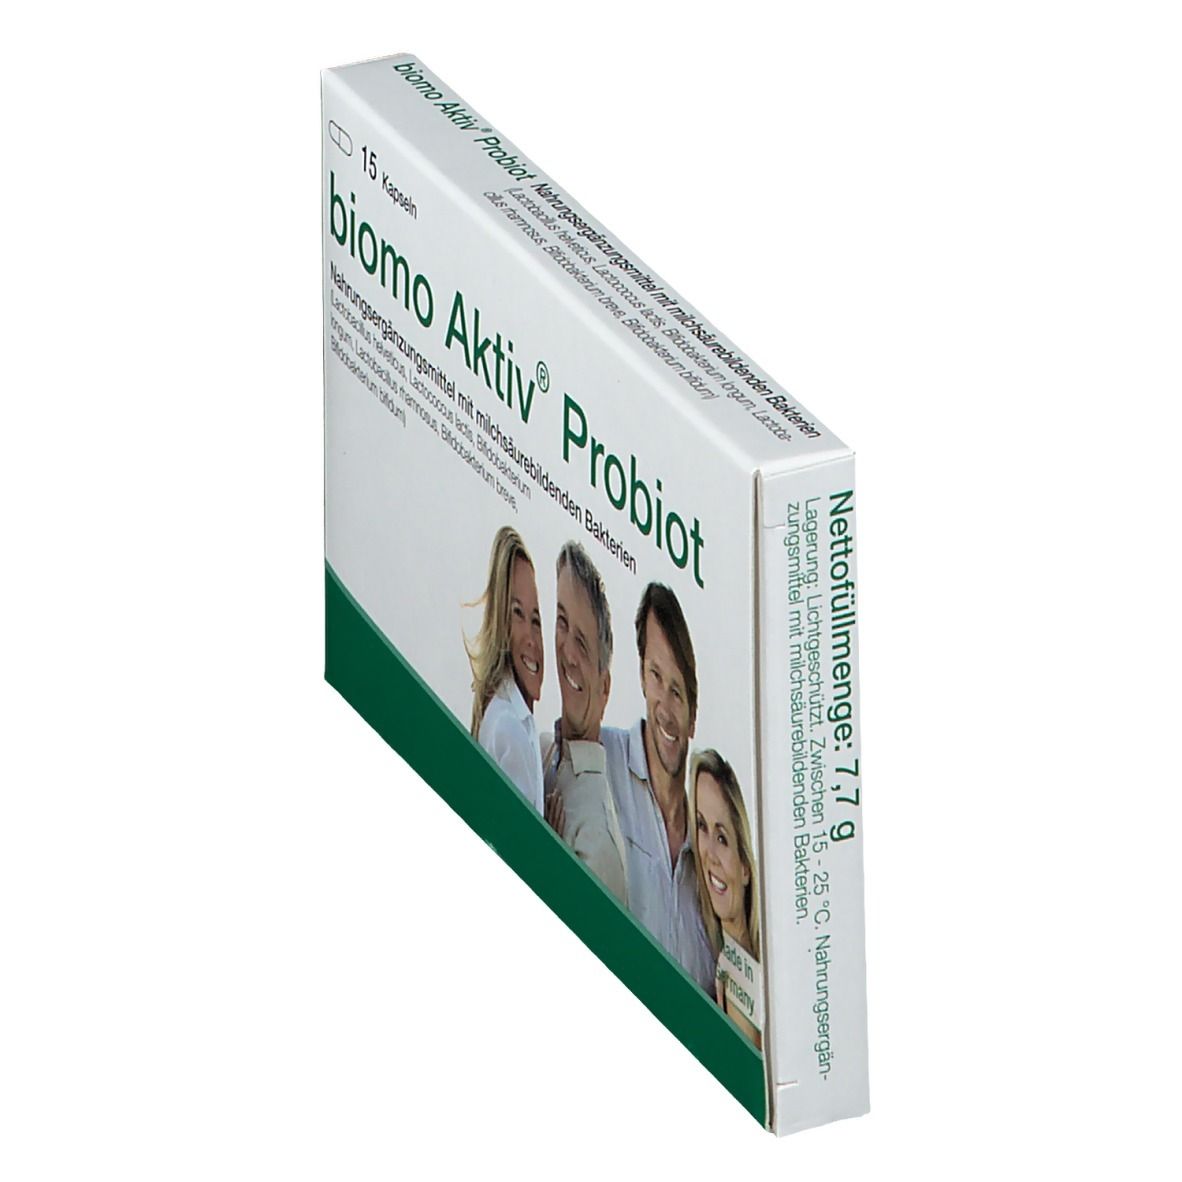 biomo Aktiv® Probiot